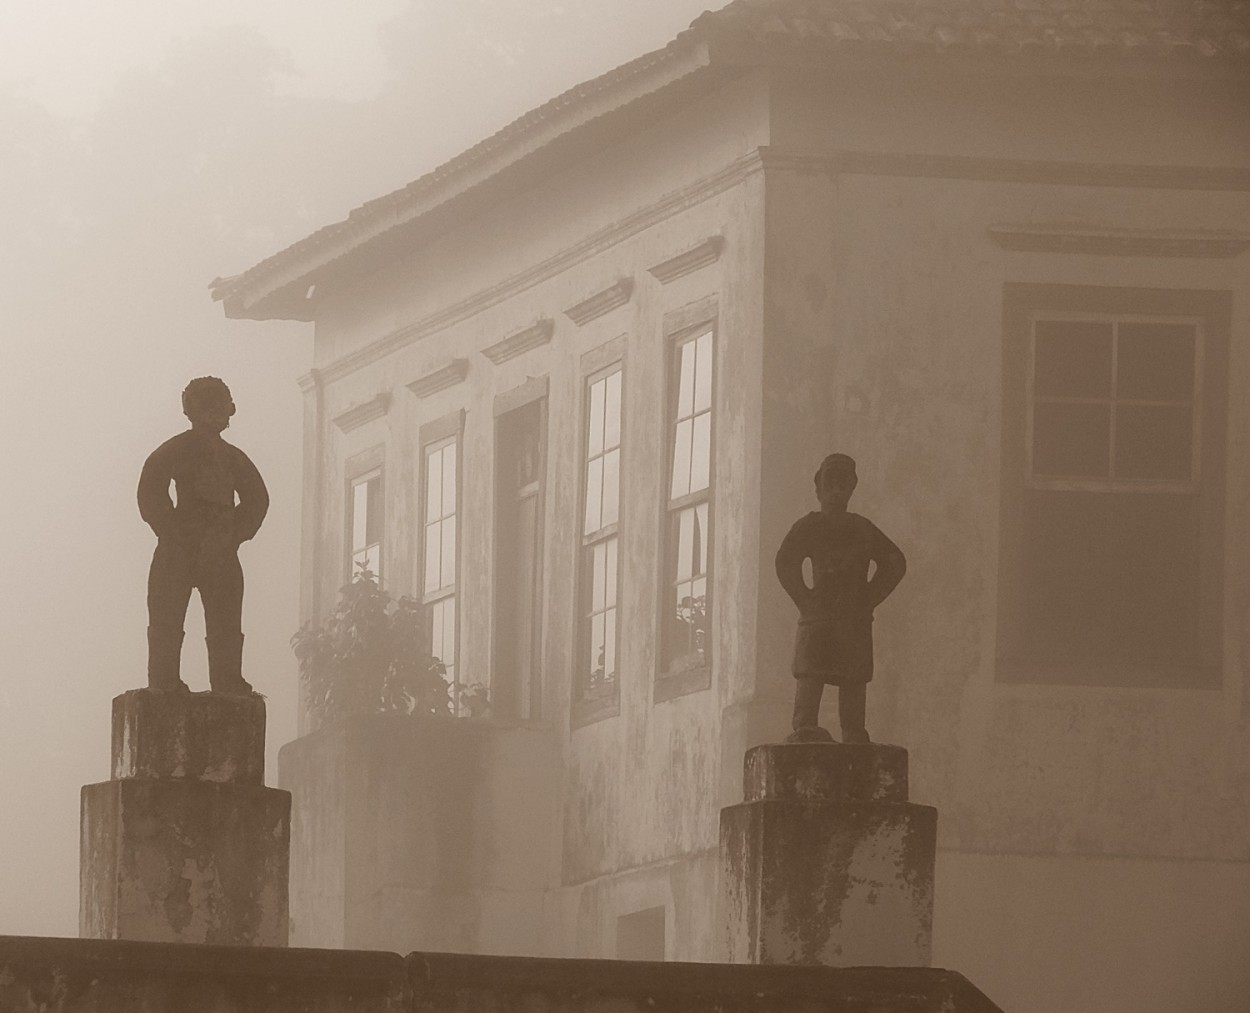 "Manh de neblina na velha fazenda cafeeira." de Decio Badari